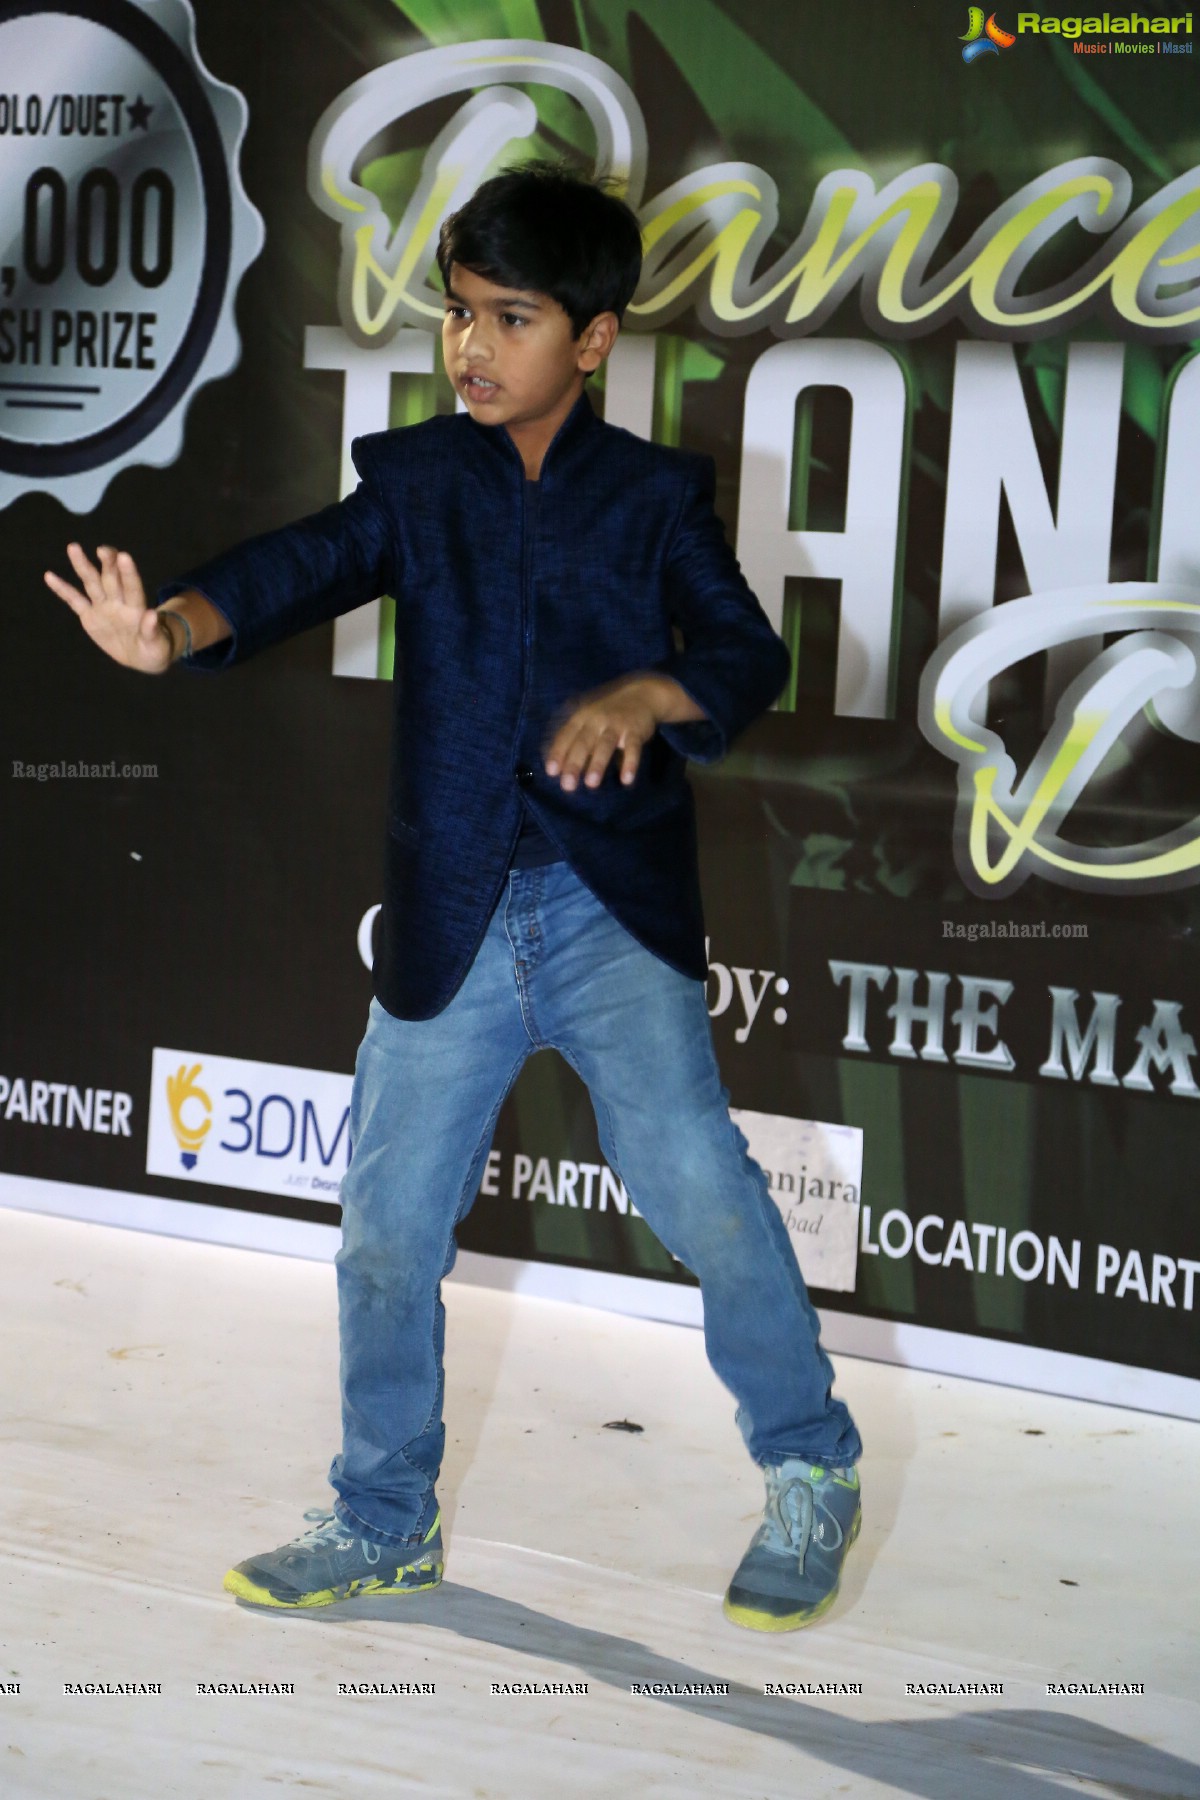 Dance Telangana Dance Final Audition at Taj Banjara, Hyderabad